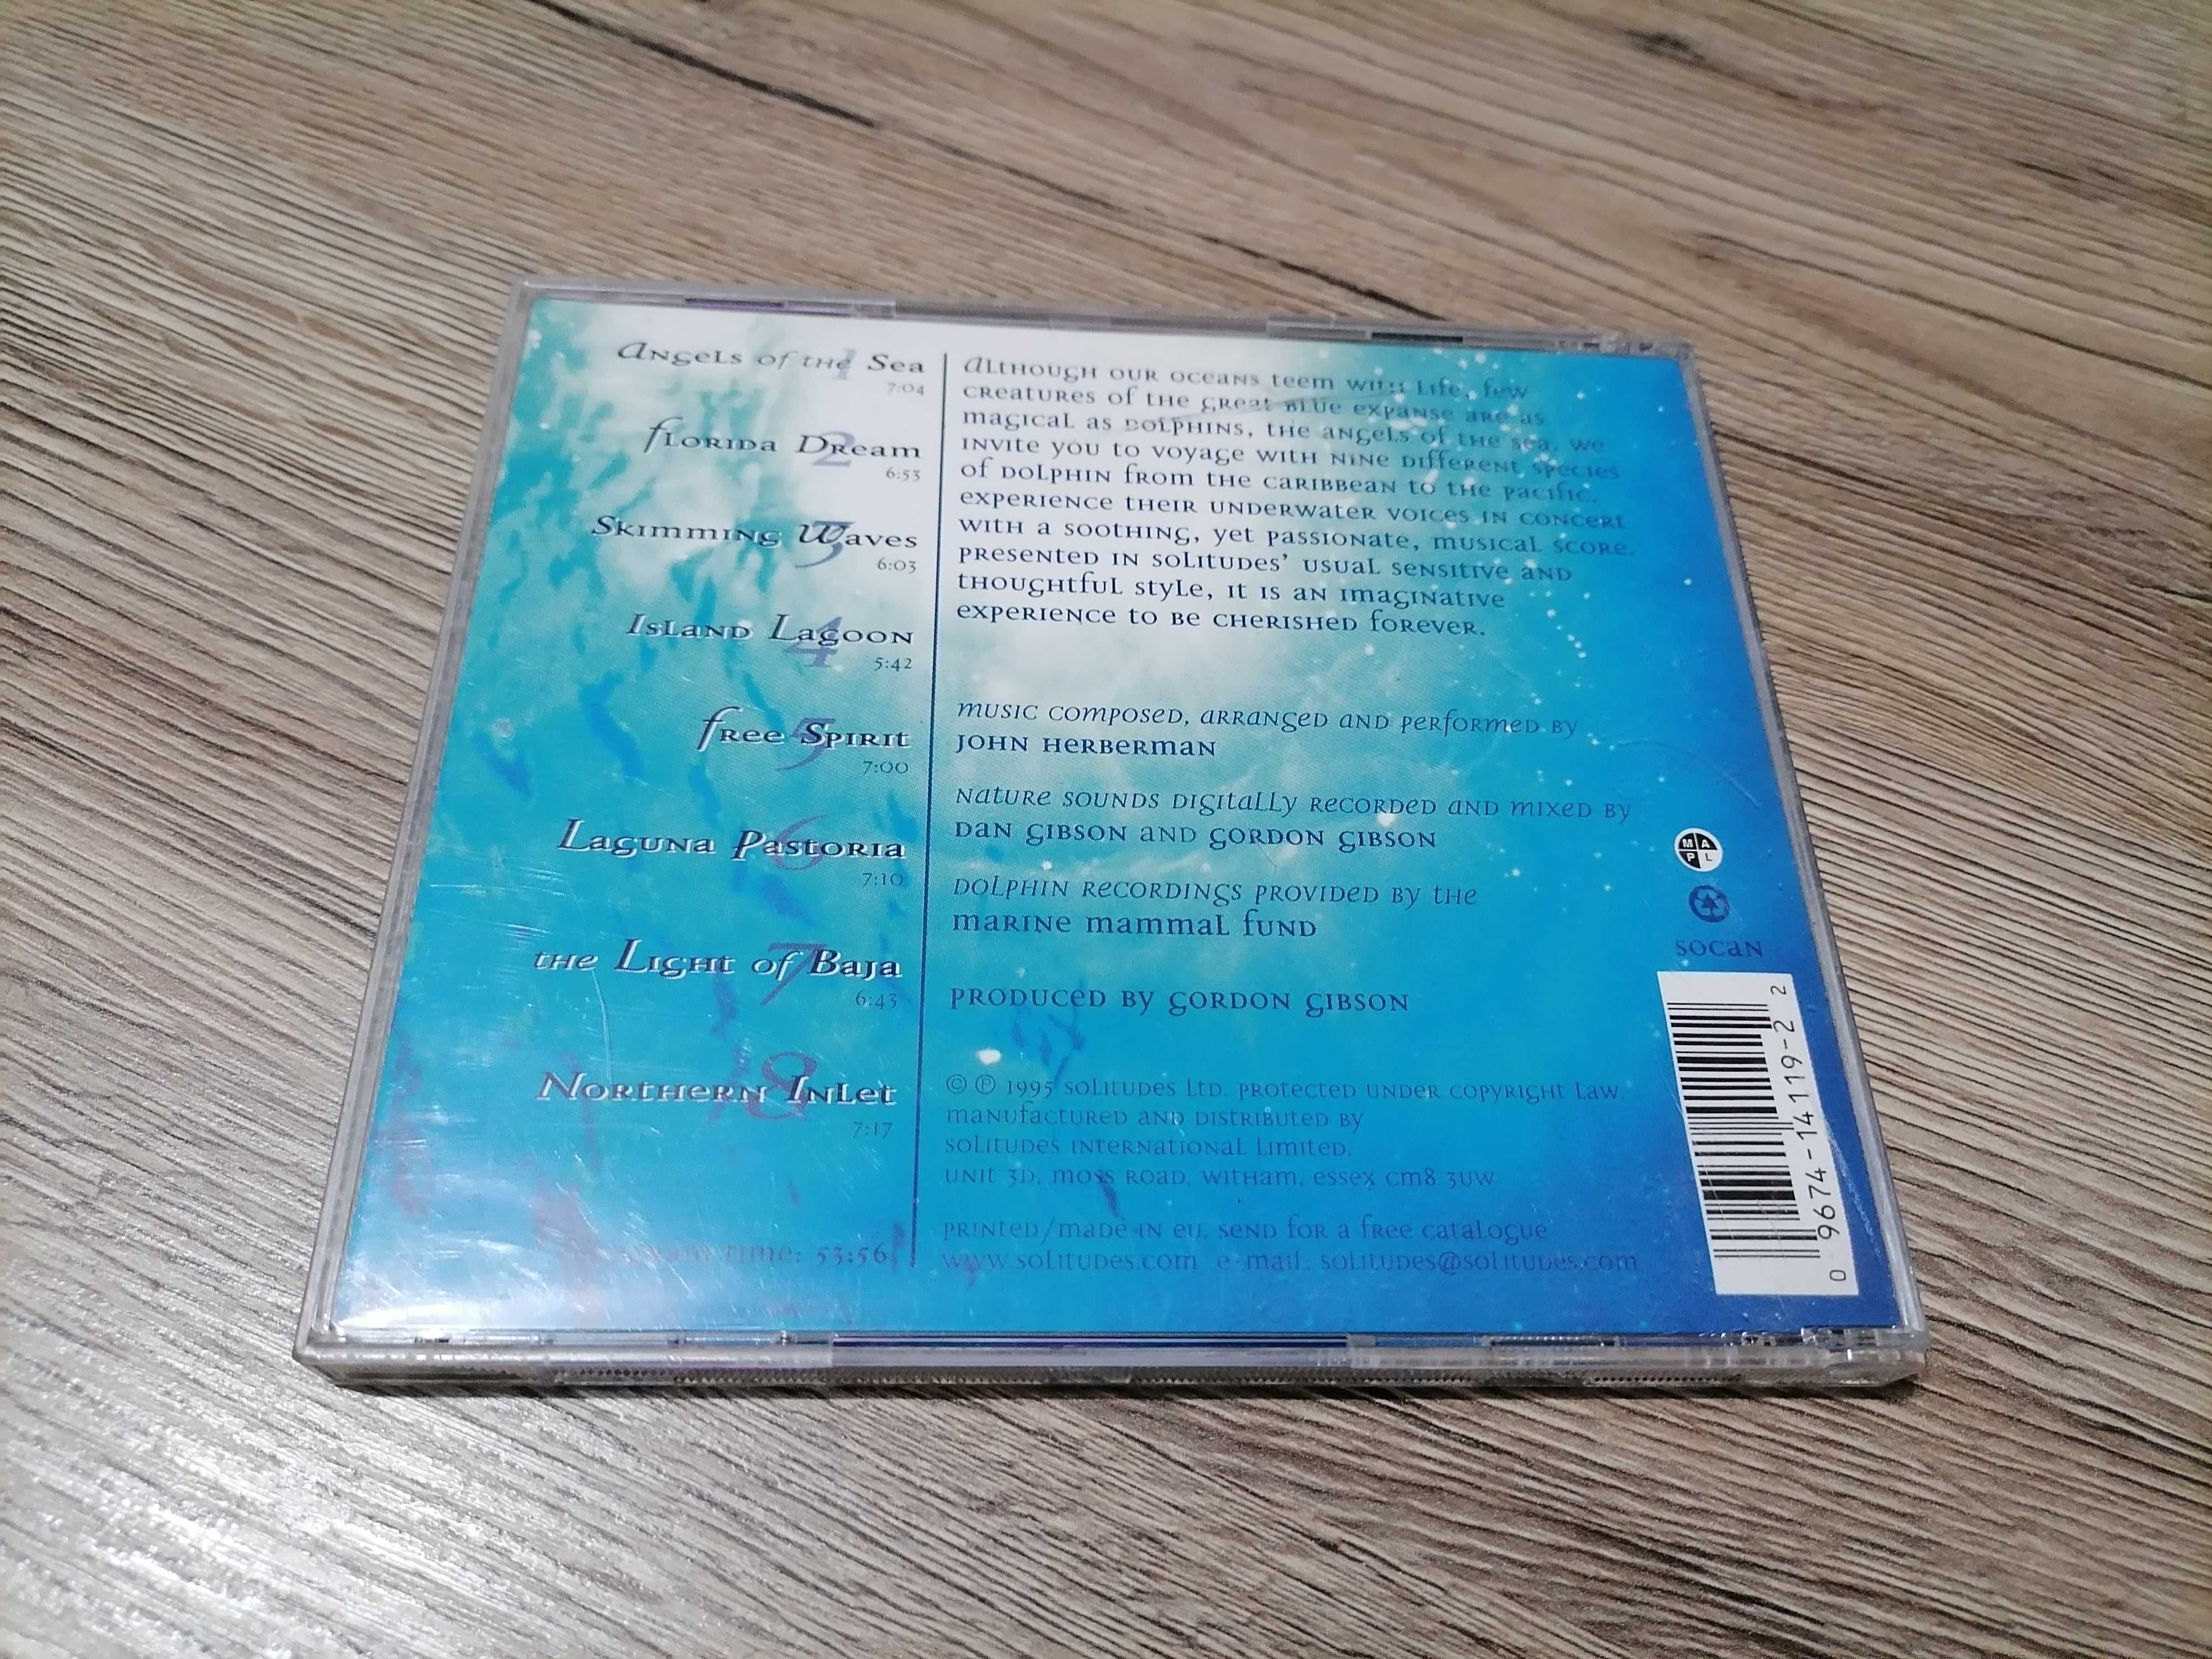 Dan Gibson – Angels Of The Sea CD